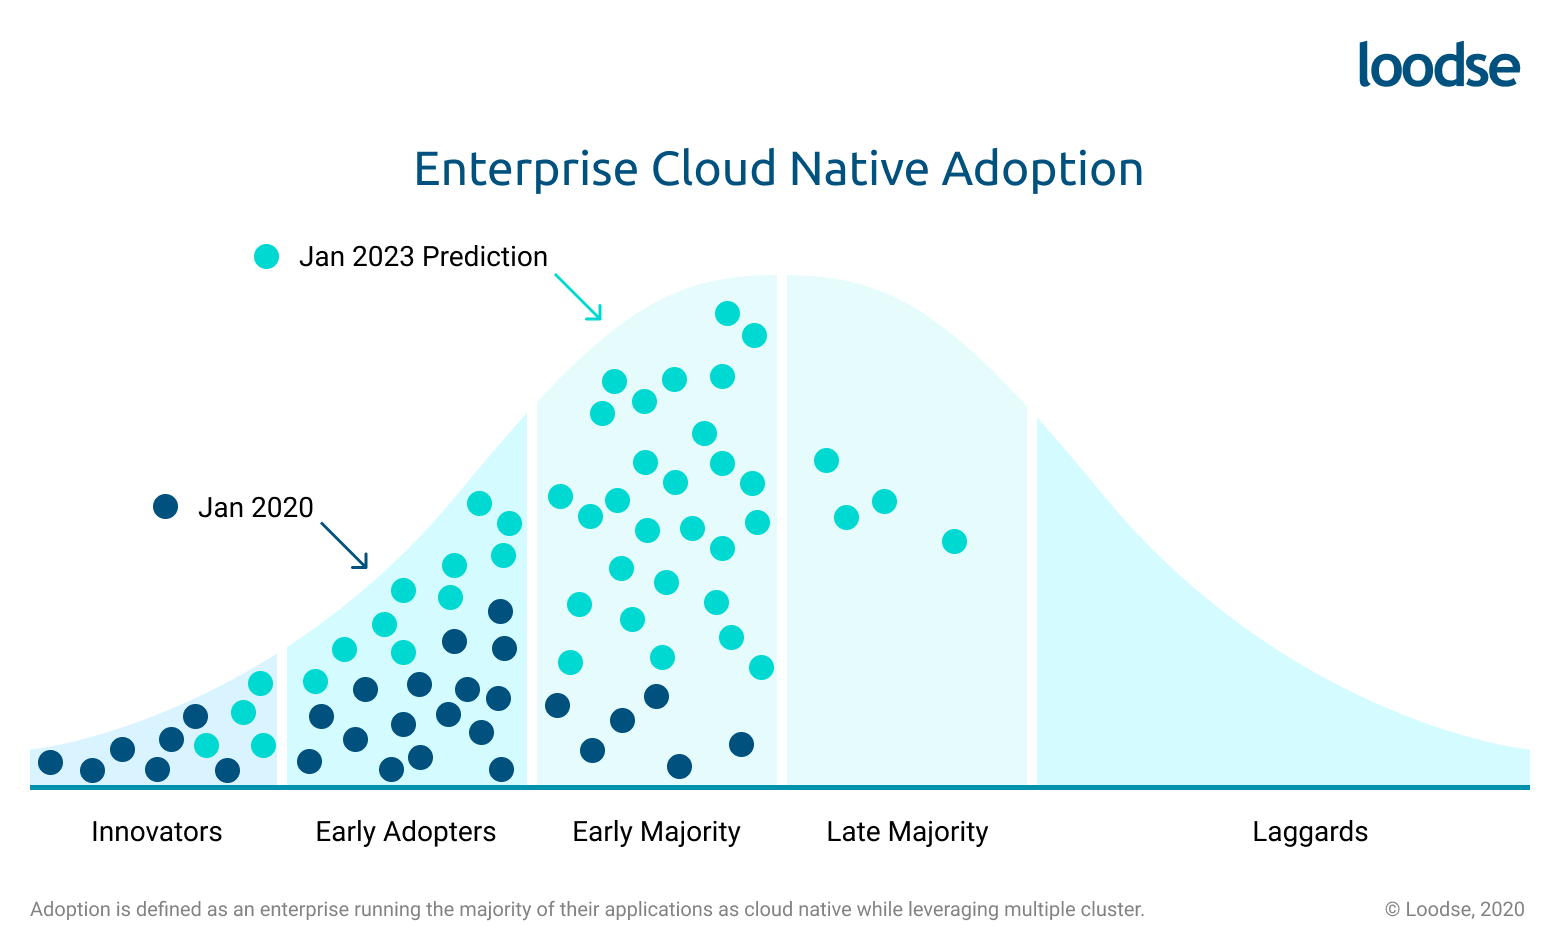 Enterprise cloud native adoption 2023 prediction